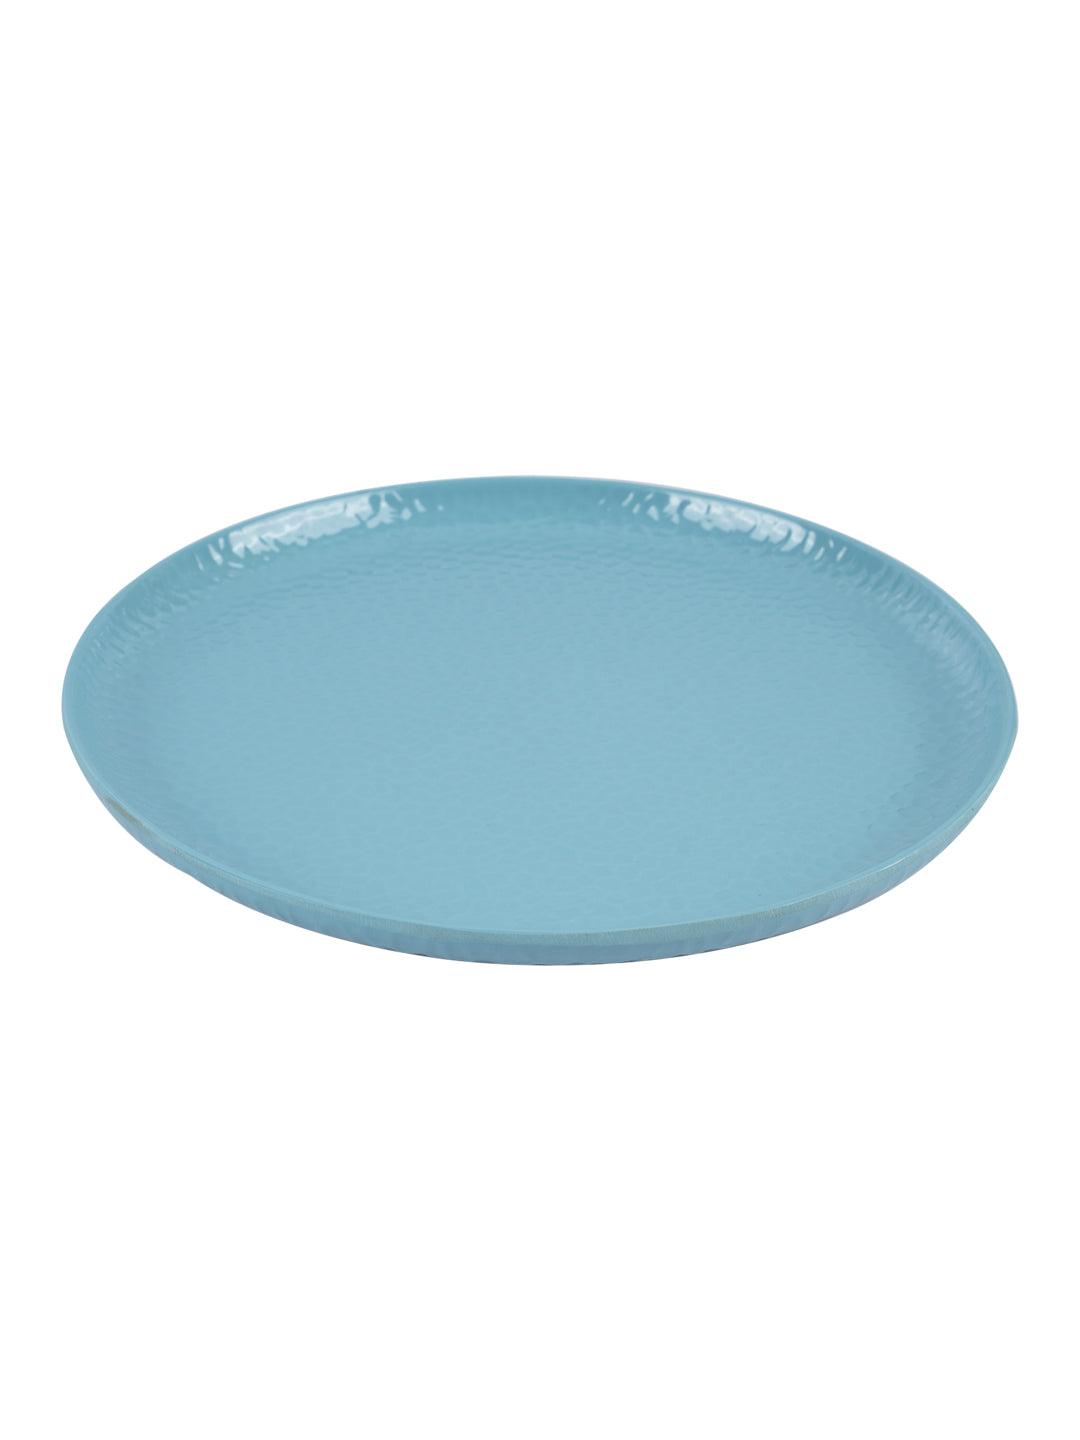 VON CASA Melamine Round Quarter Plate - Set of 6, Turquoise